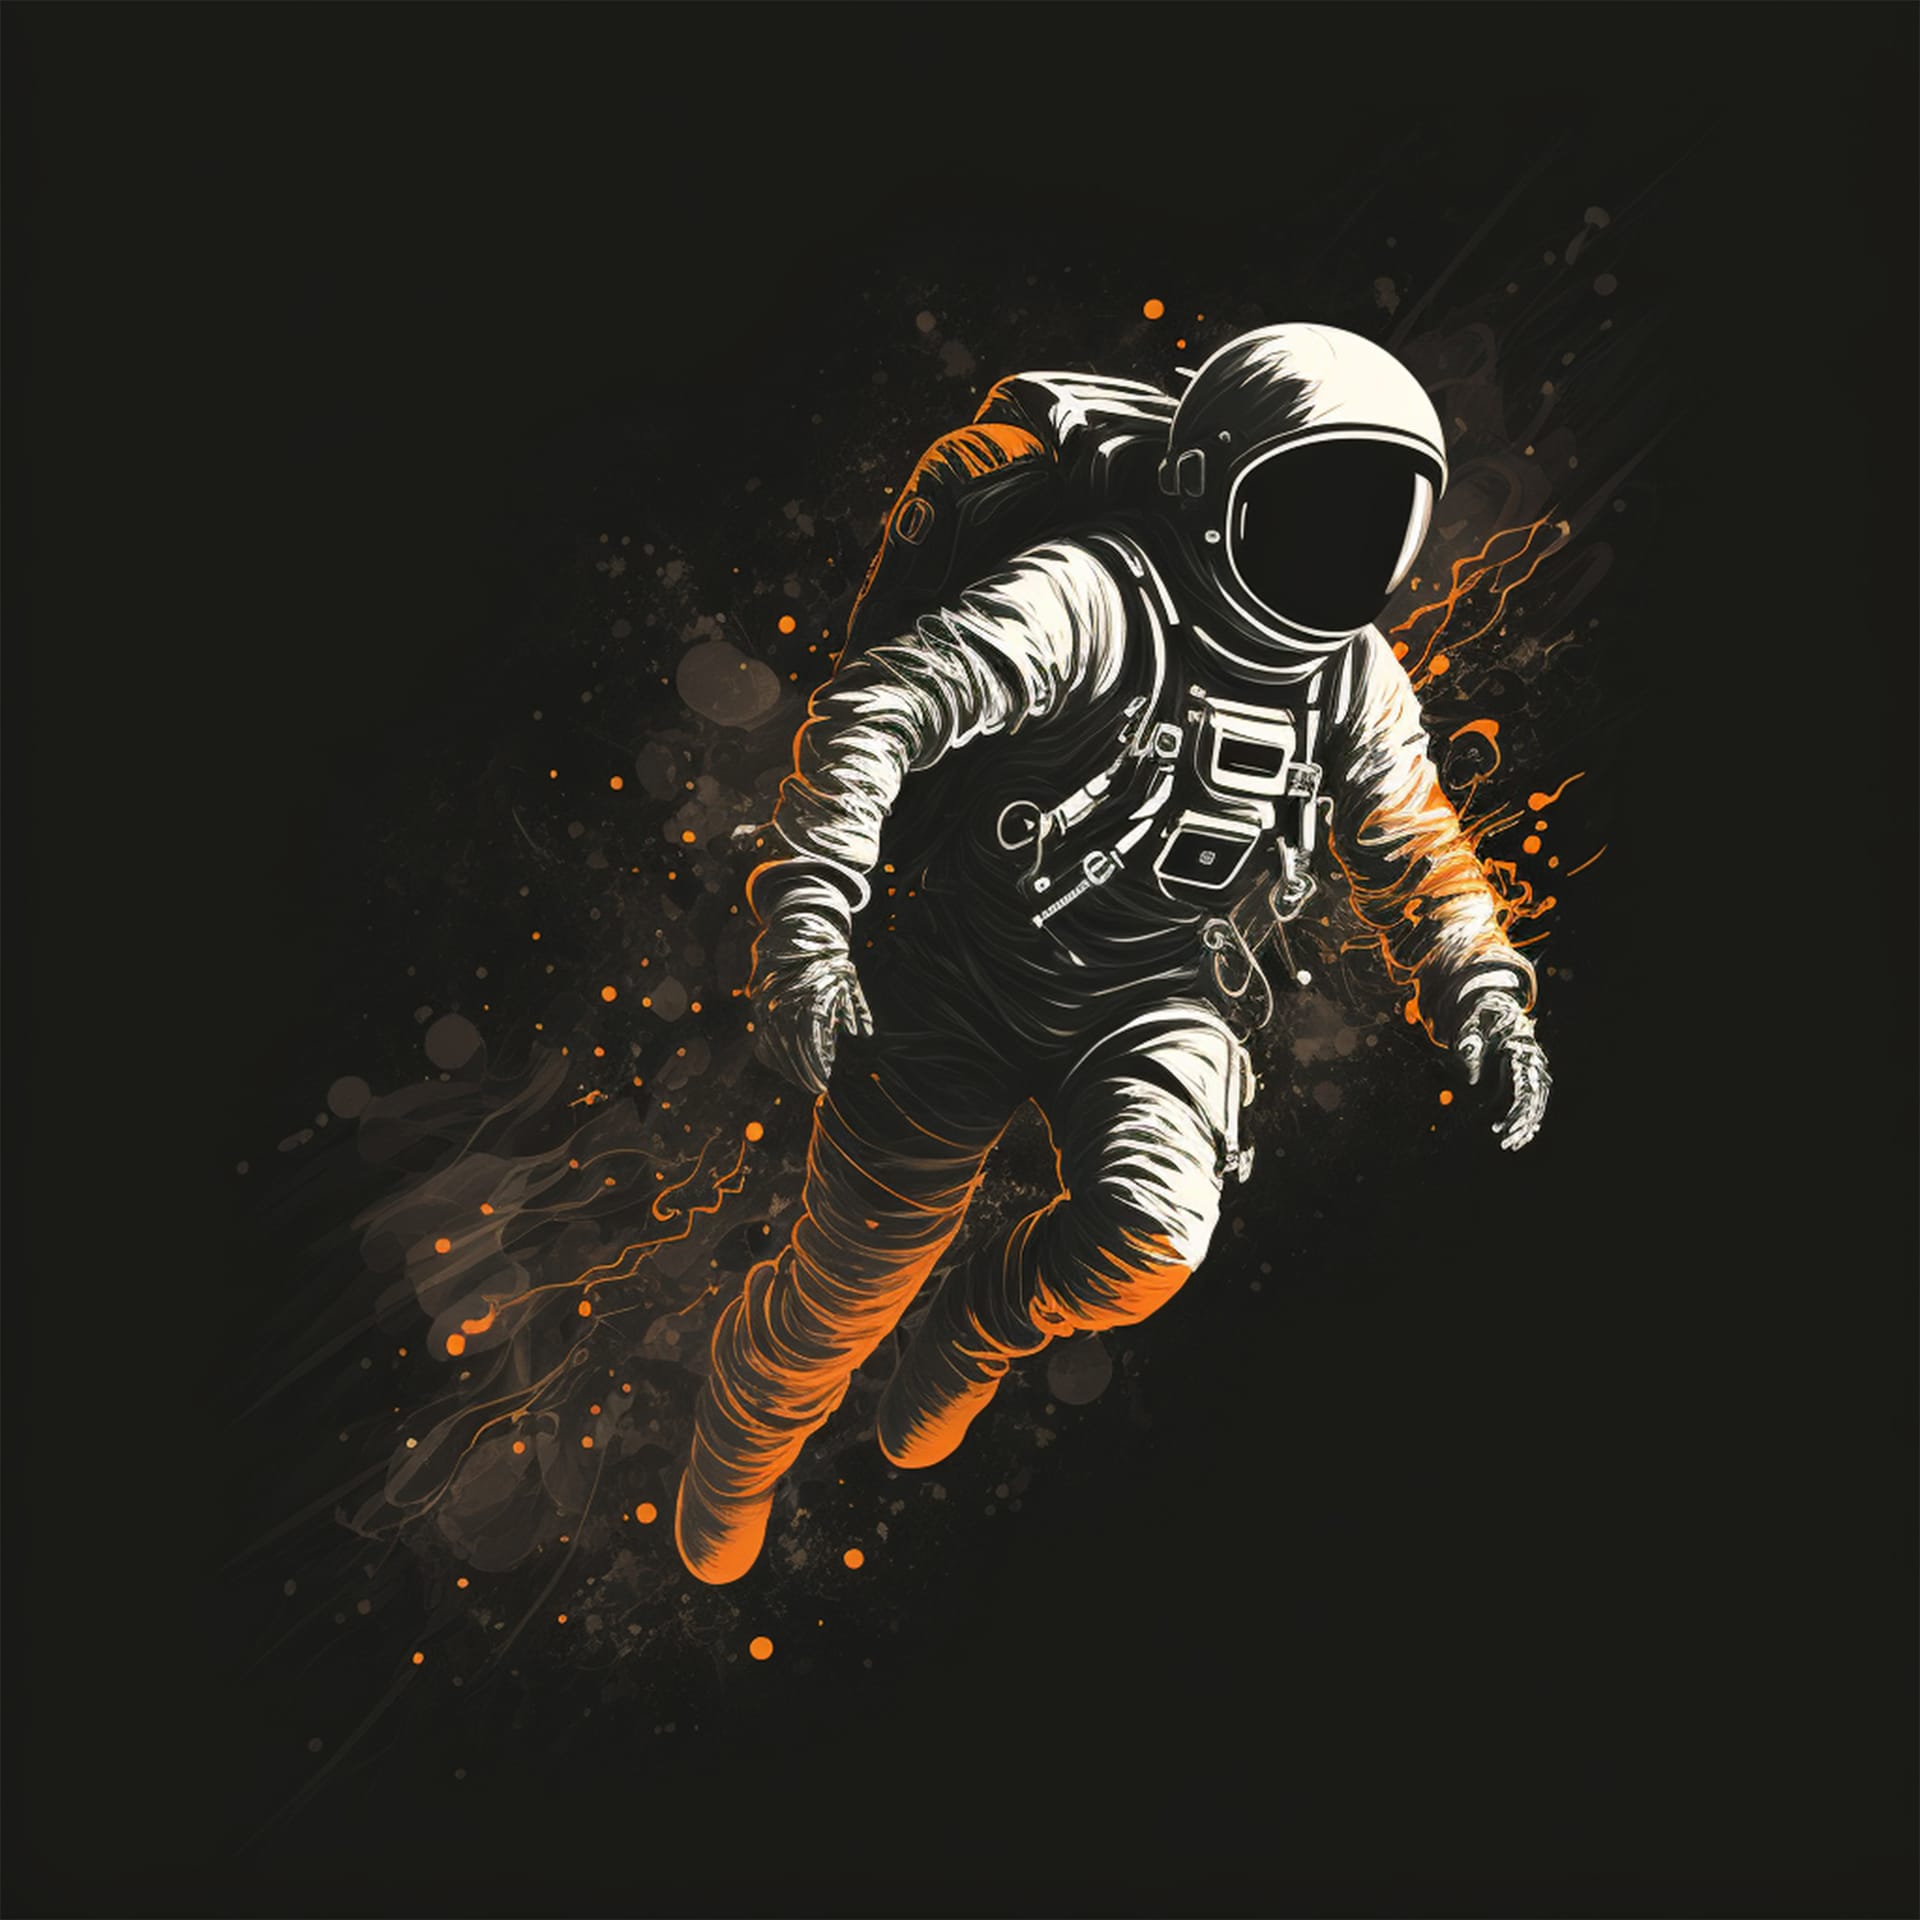 Astronaut digital art retro assets isolated black background